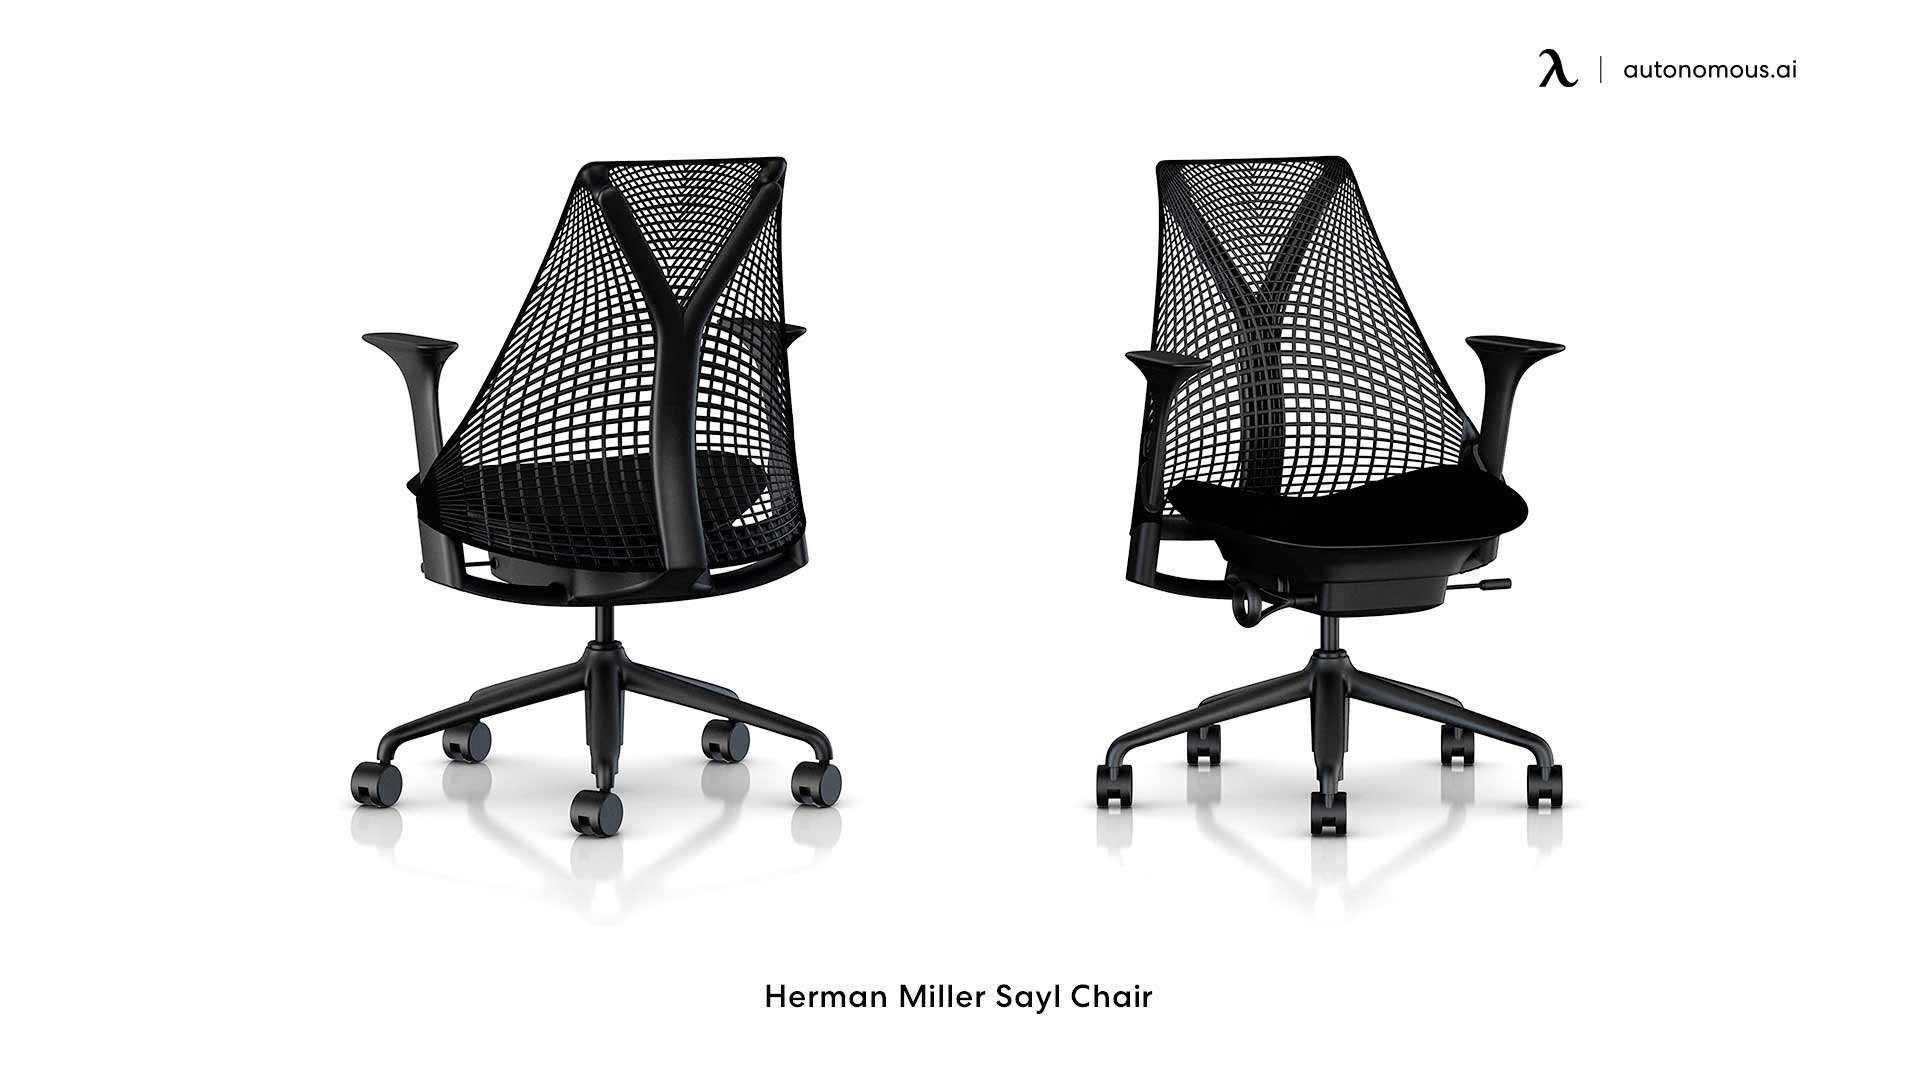 Herman Miller Sayl comfortable home office chair